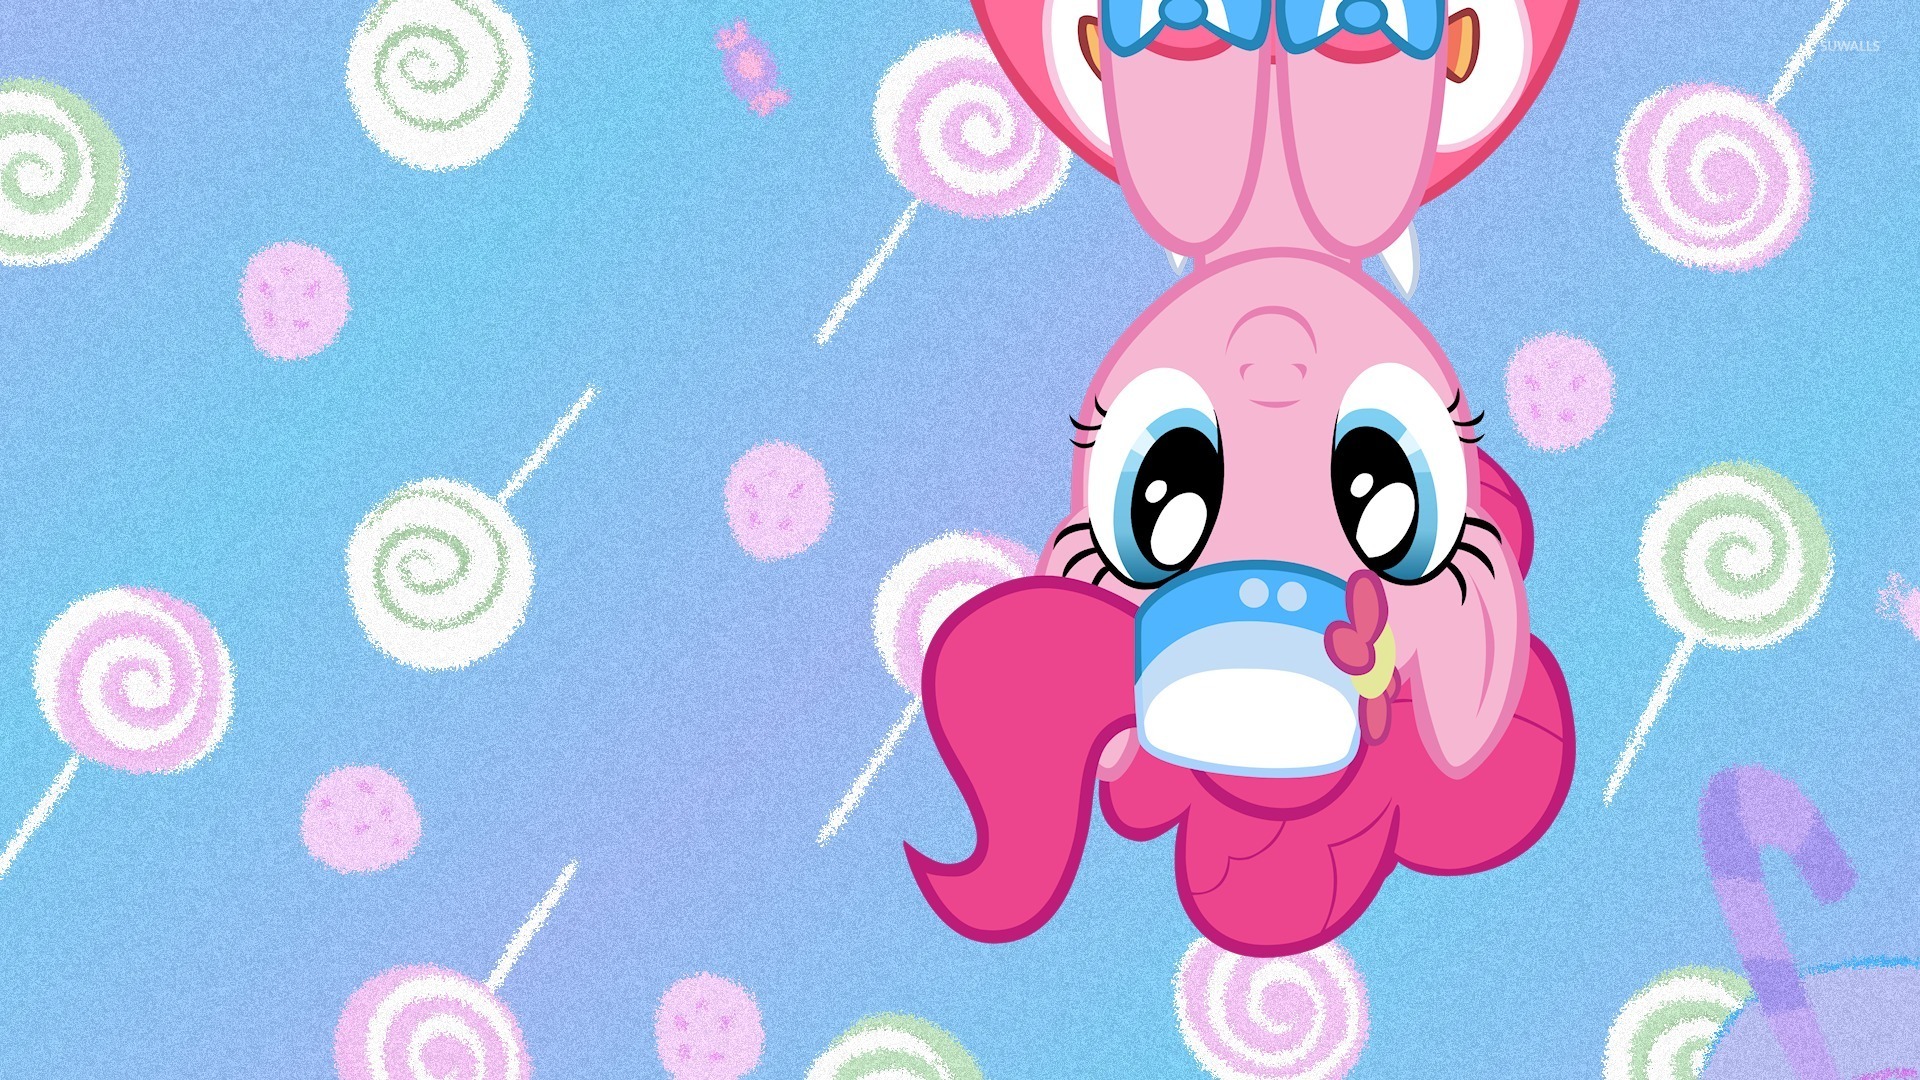 Upside Down Pinkie Pie From My Little Pony Wallpaper Cartoon